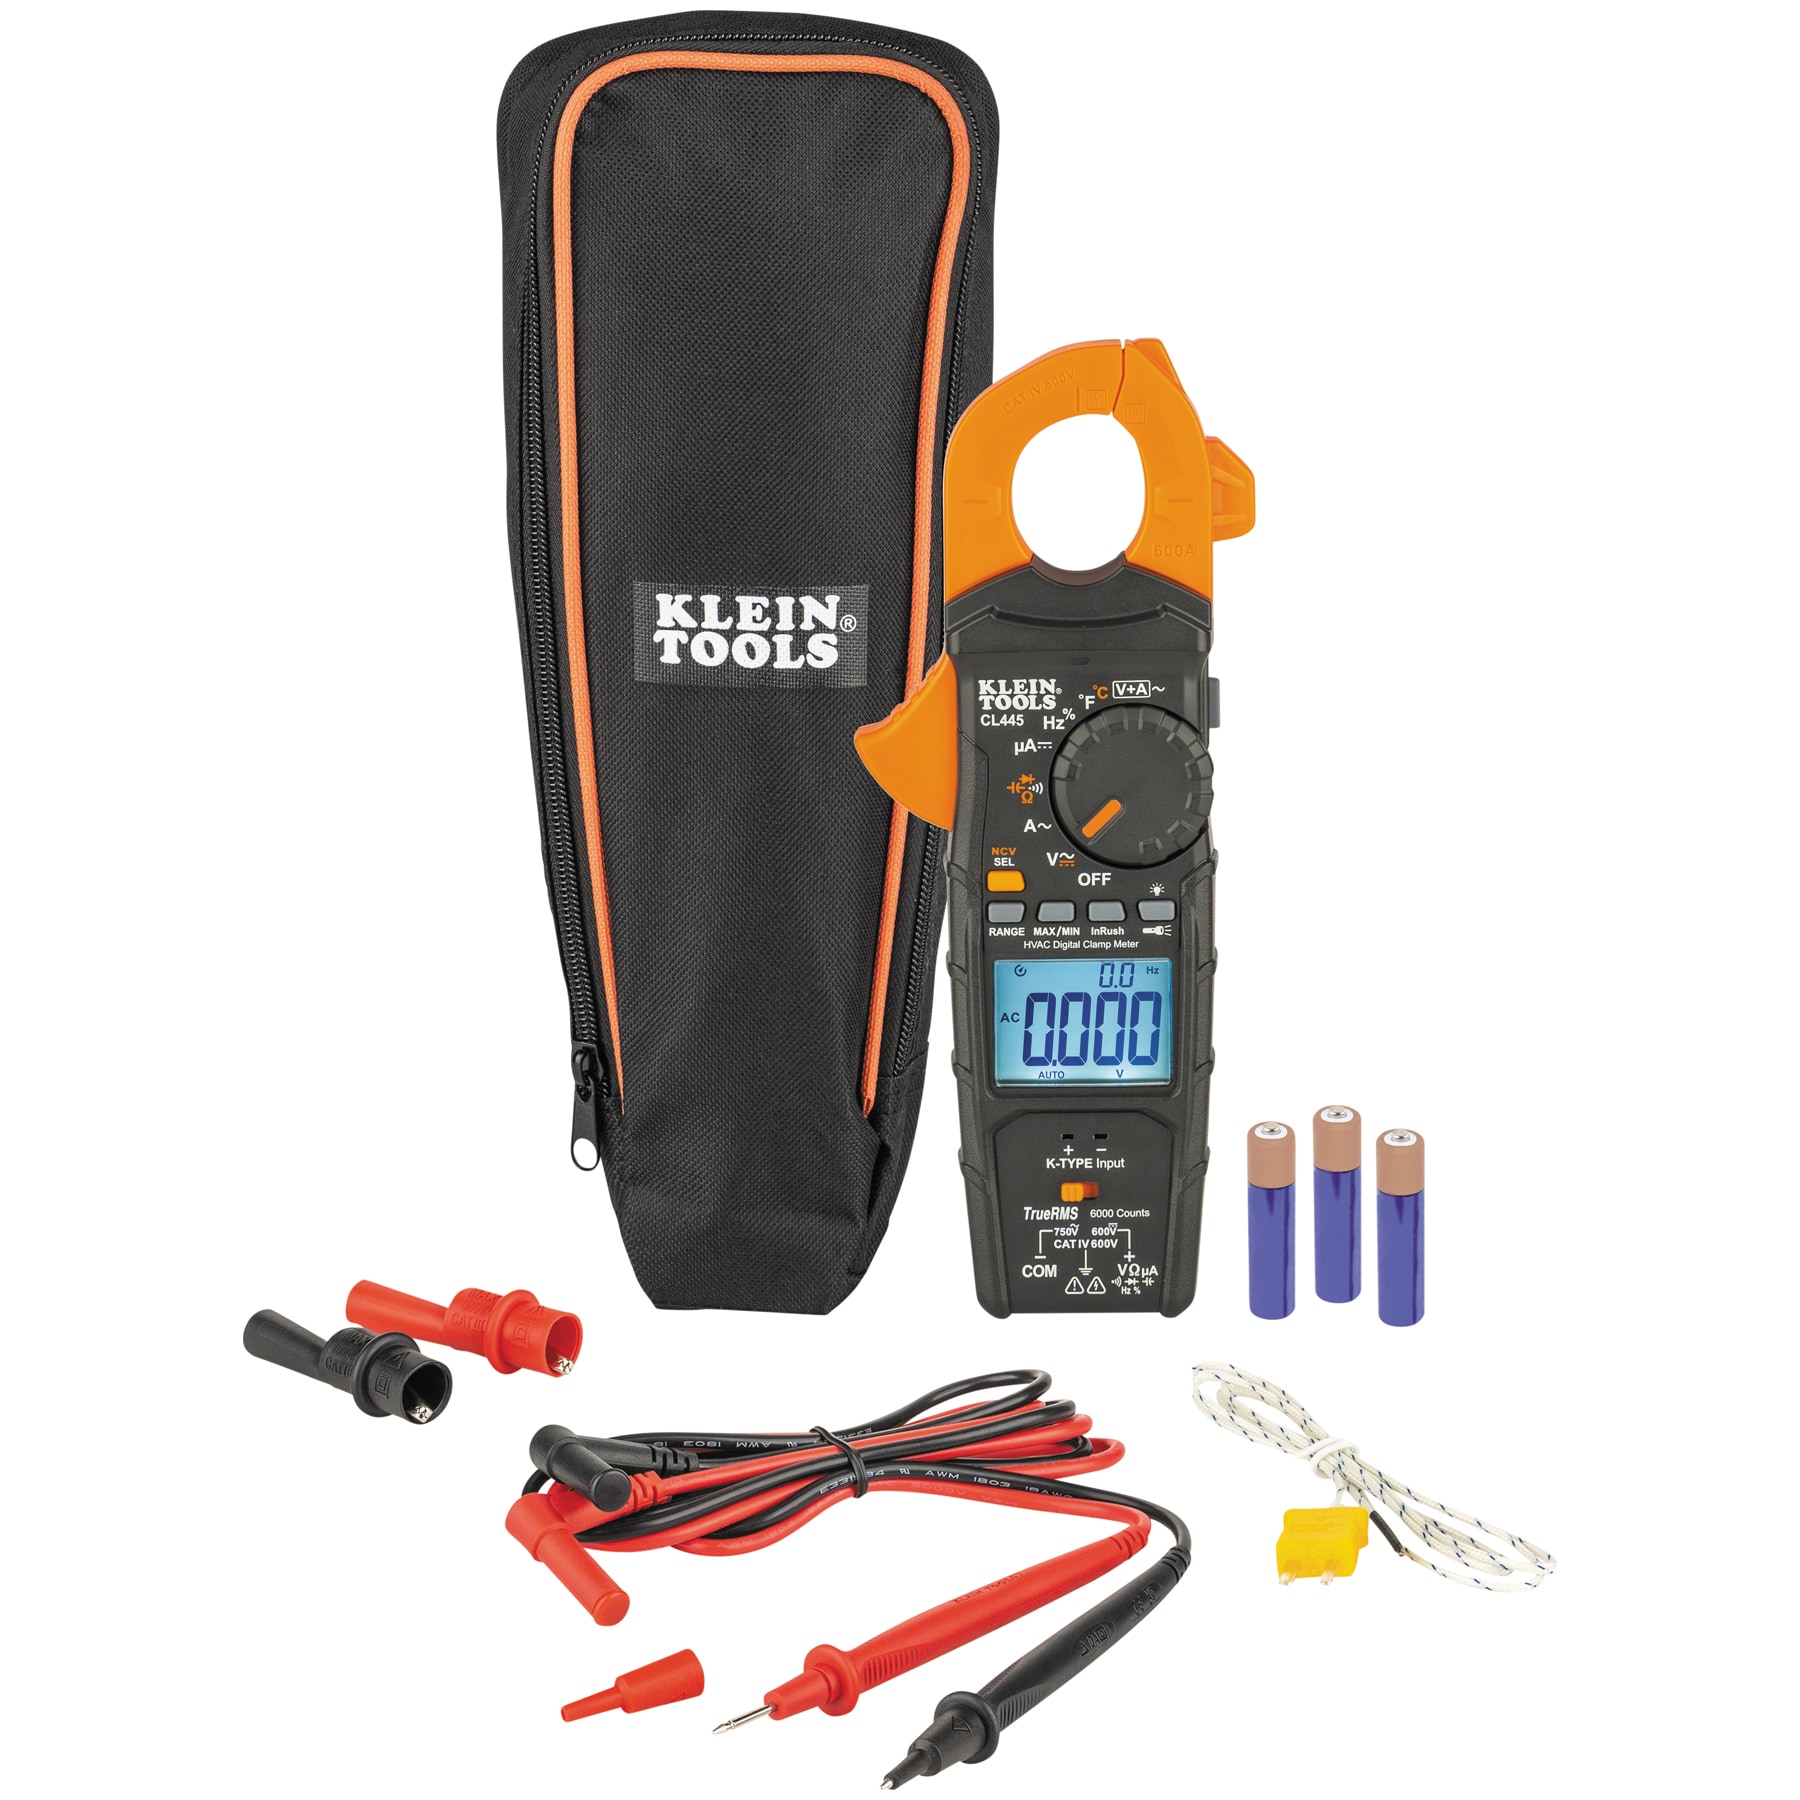 Non-contact Lcd Clamp Meter Multimeter 600 Amp 600-Volt in Orange | - Klein Tools CL445